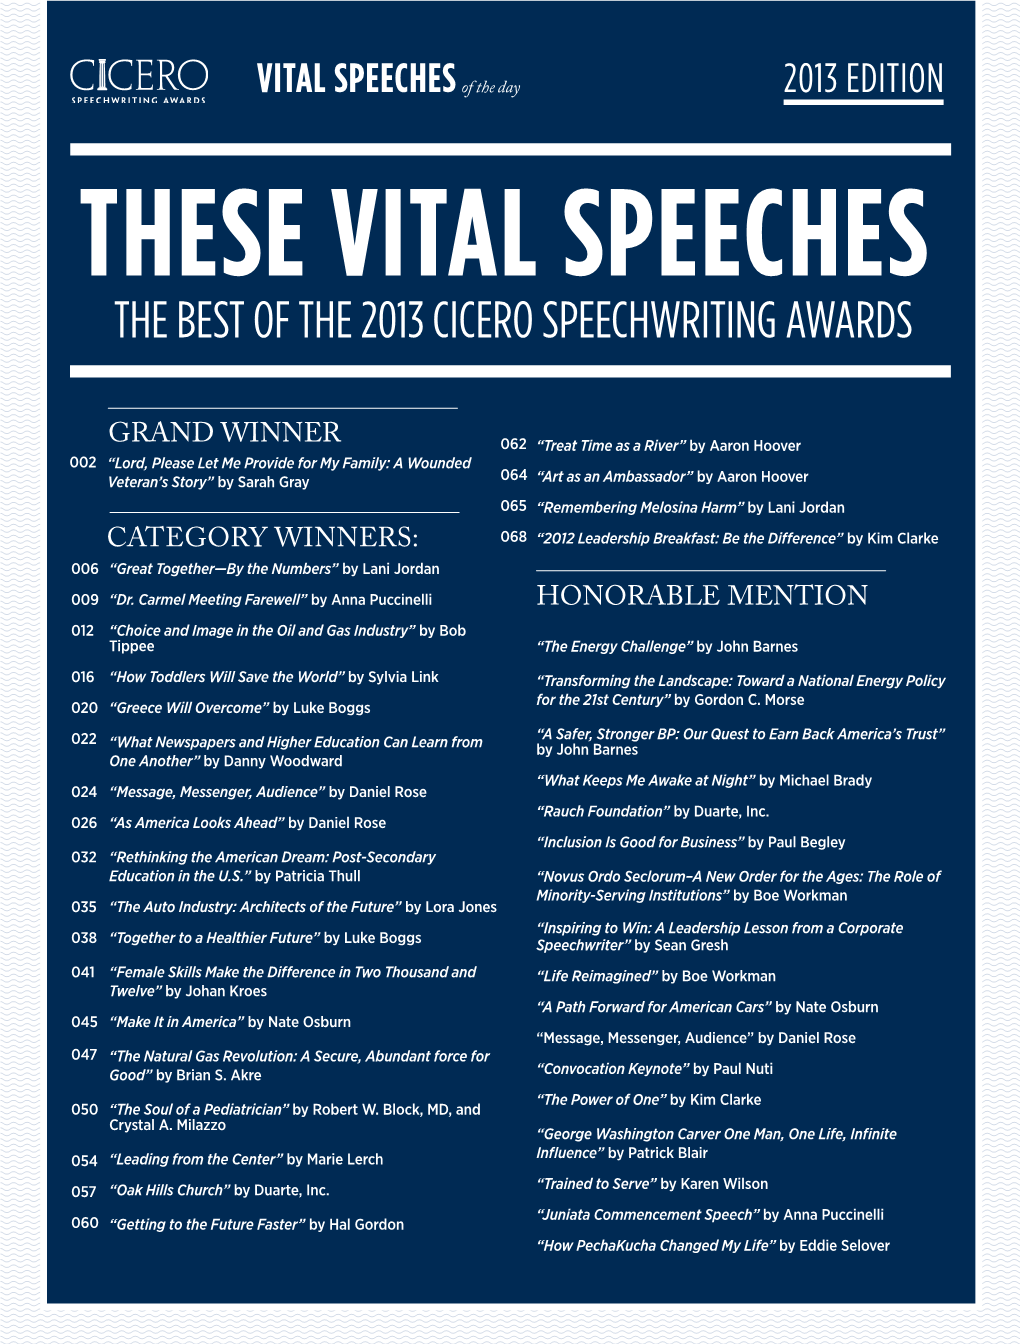 The Best of the 2013 Cicero Speechwriting Awards